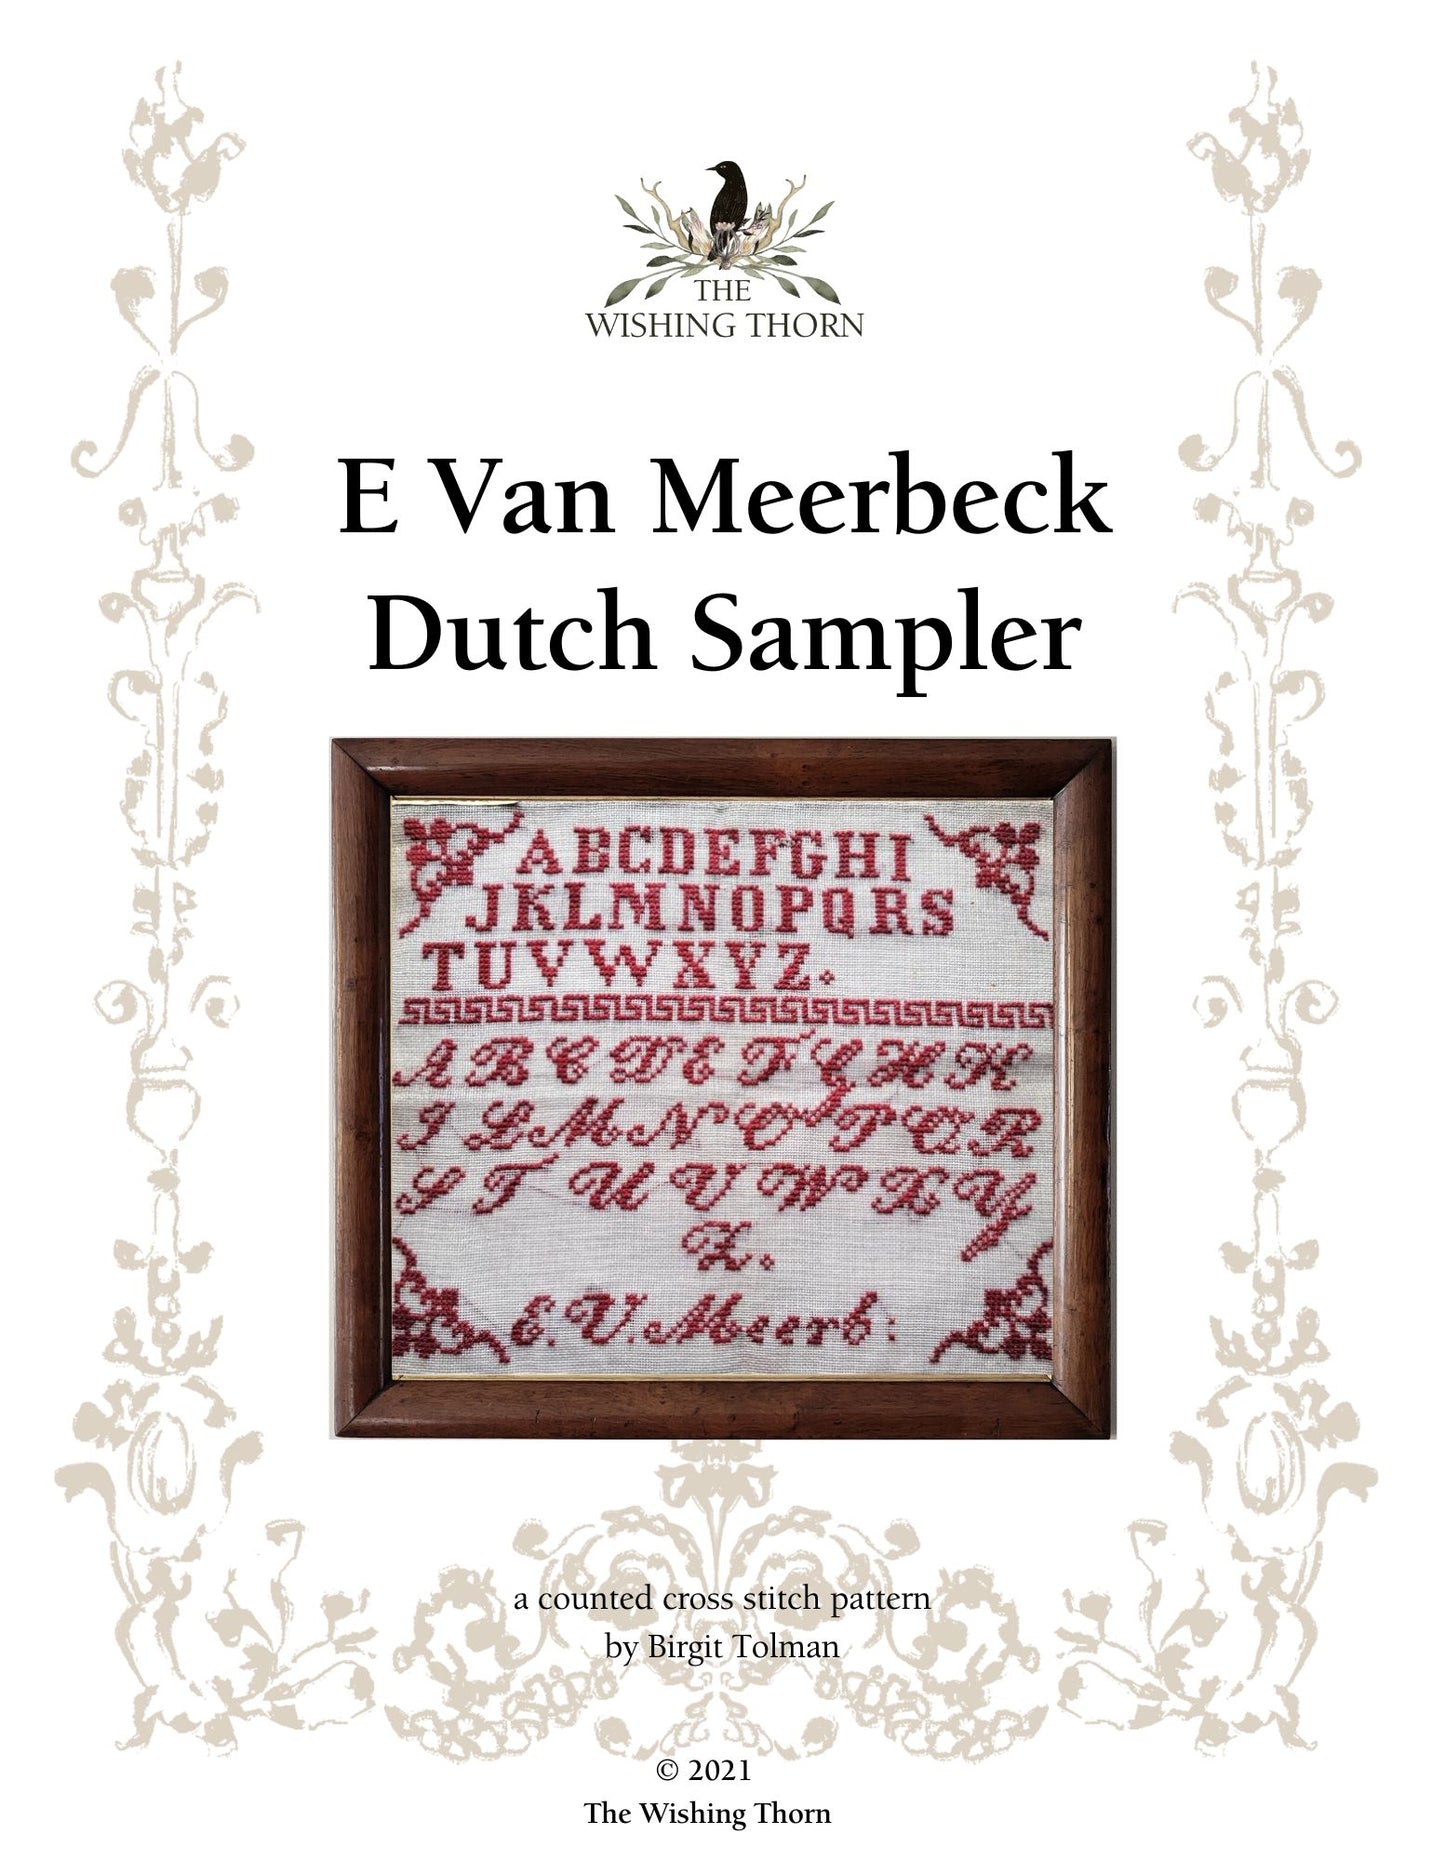 E Van Meerbeck Sampler Pattern